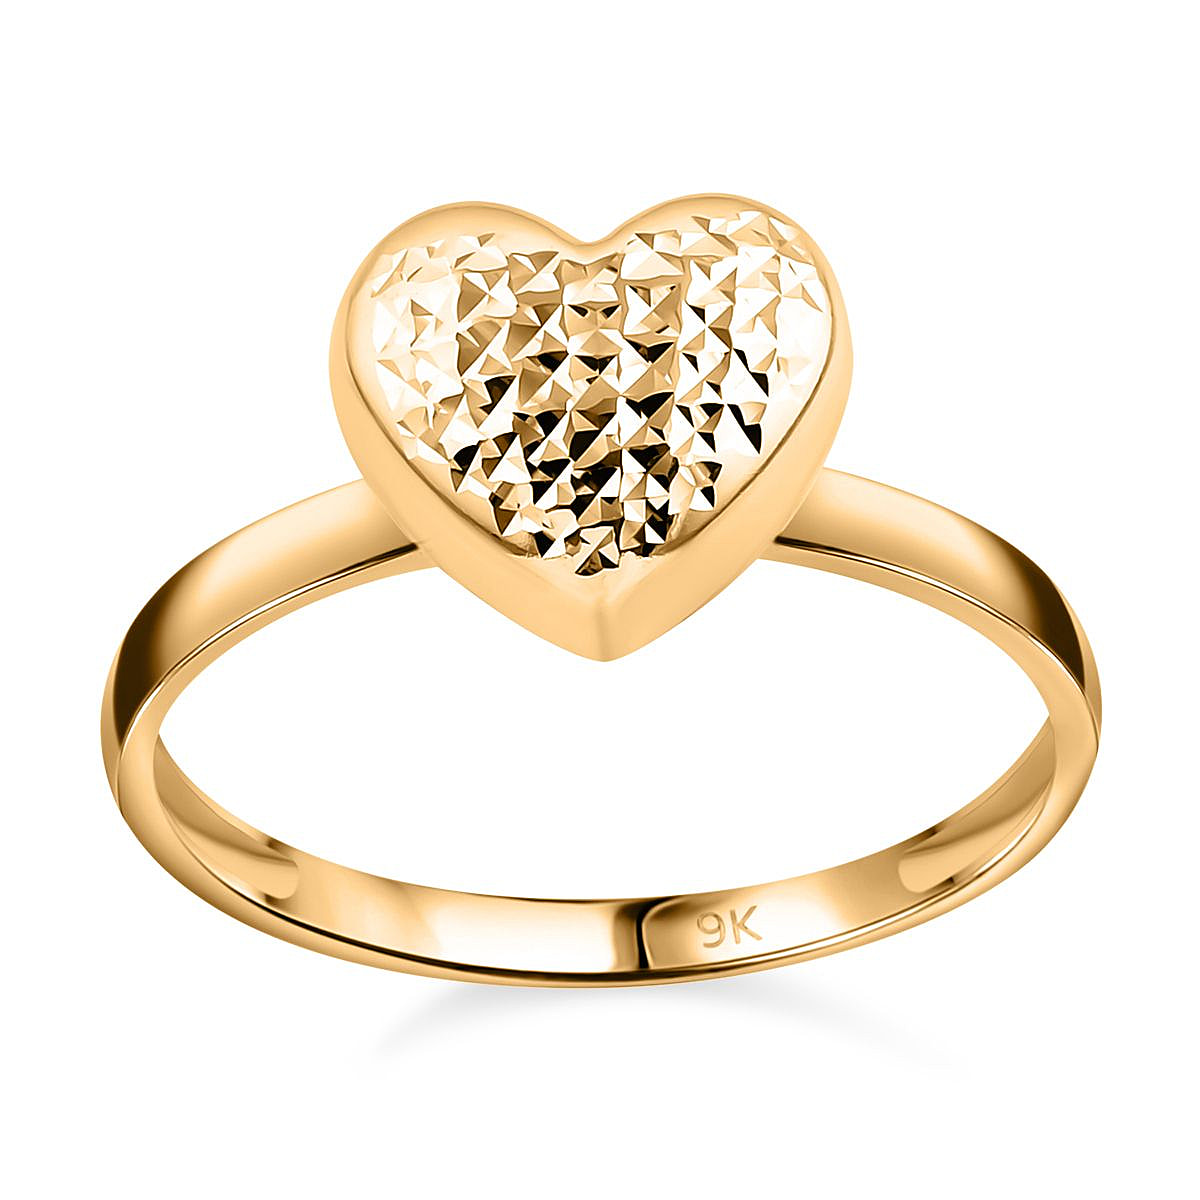 9K Yellow Gold Heart Ring